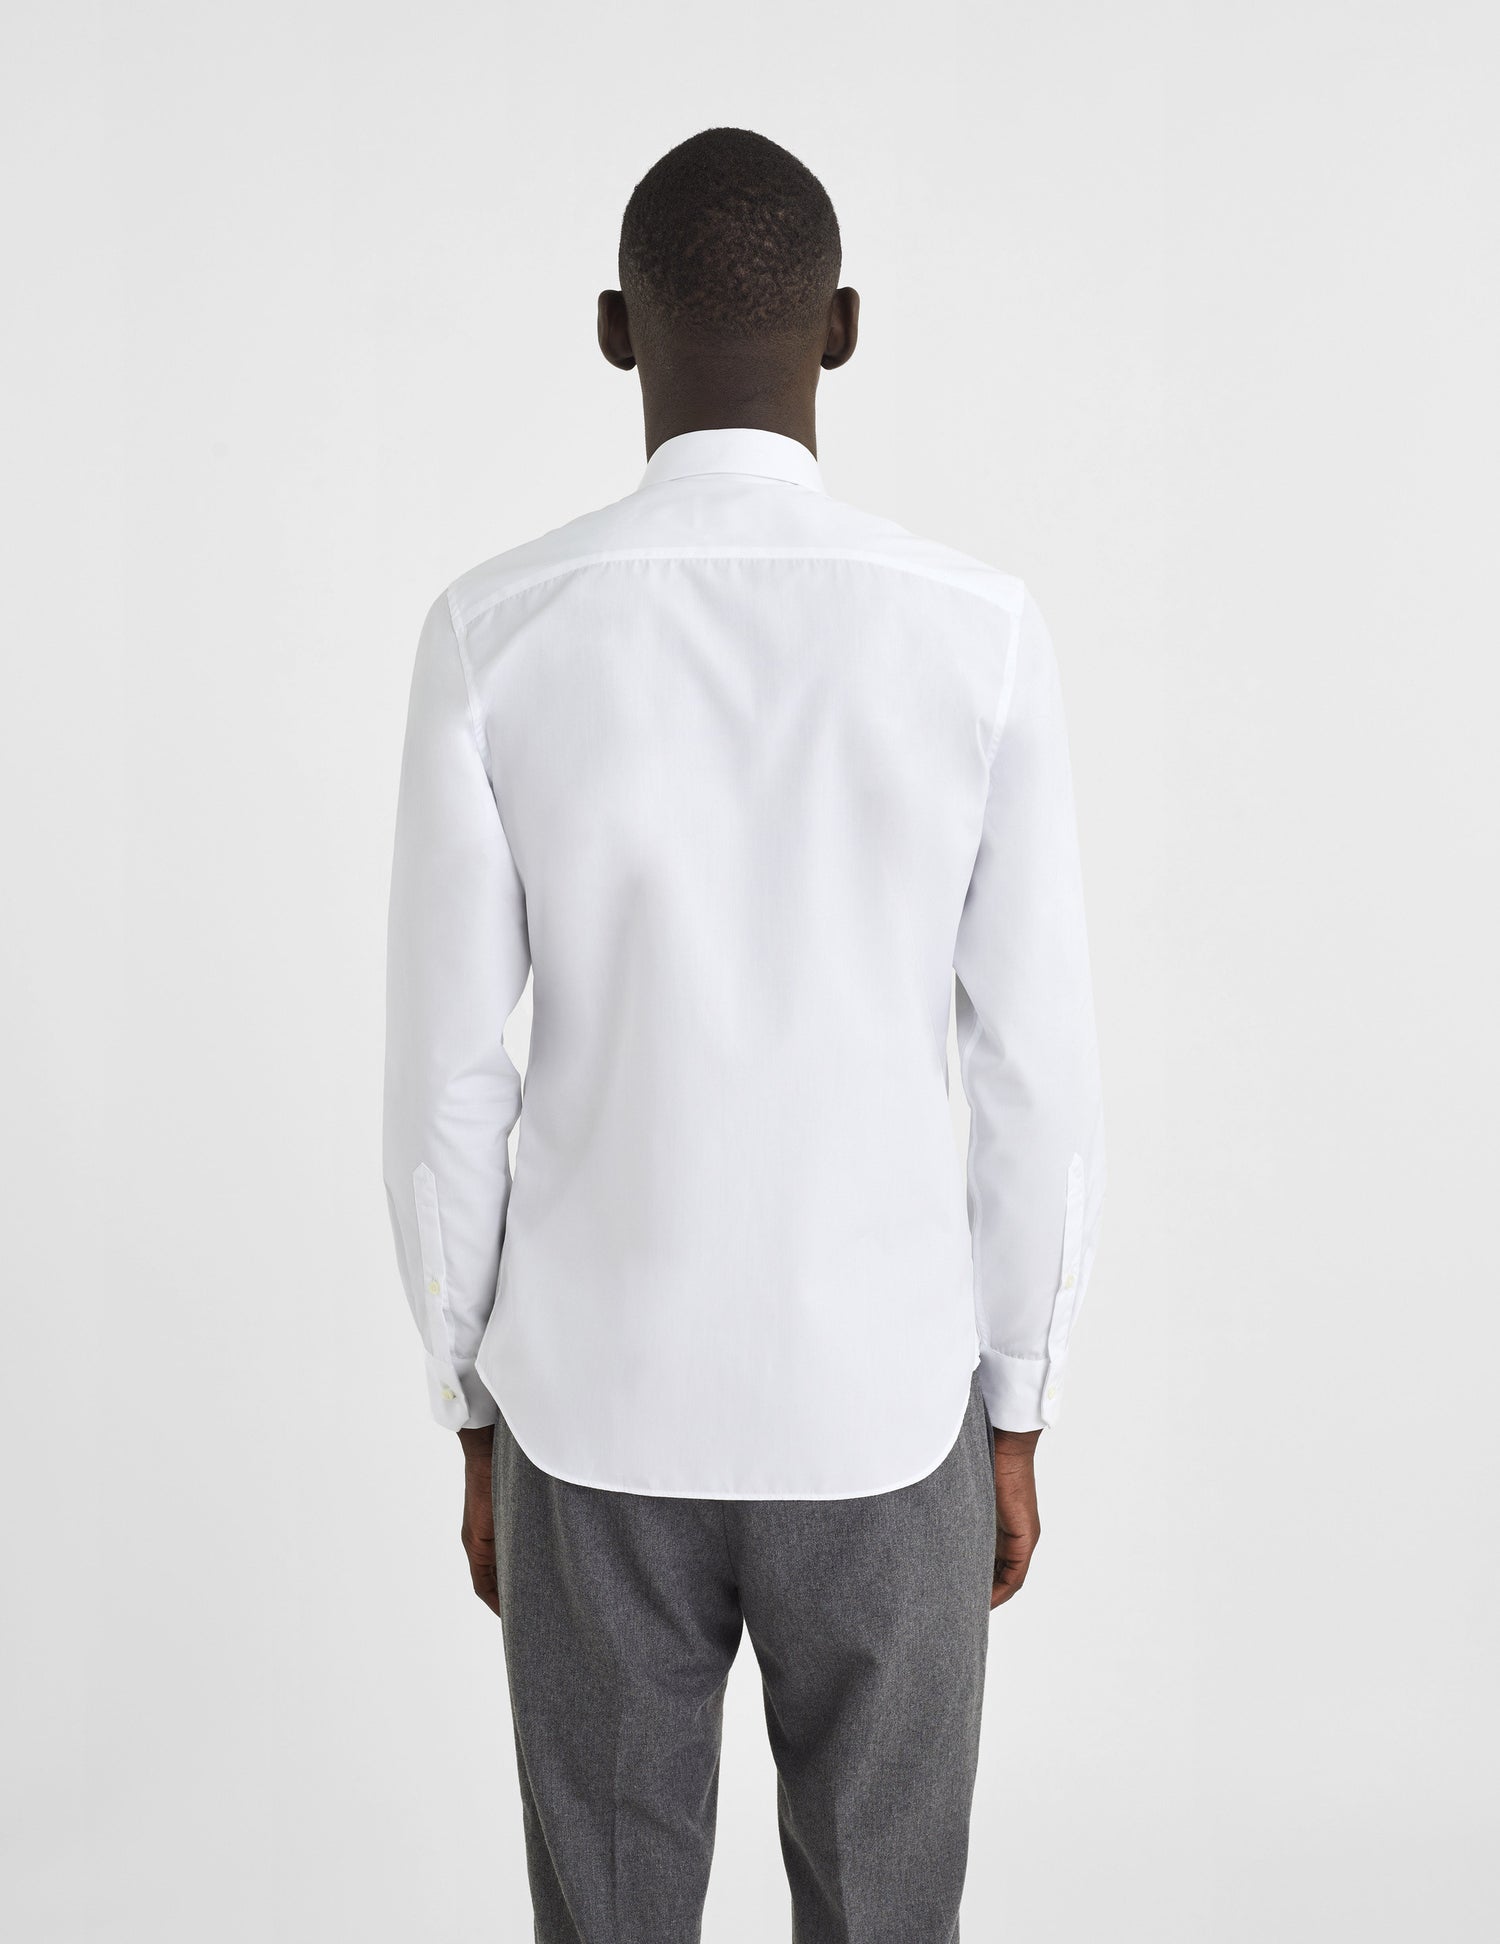 Fitted white shirt - Poplin - Italian Collar#4